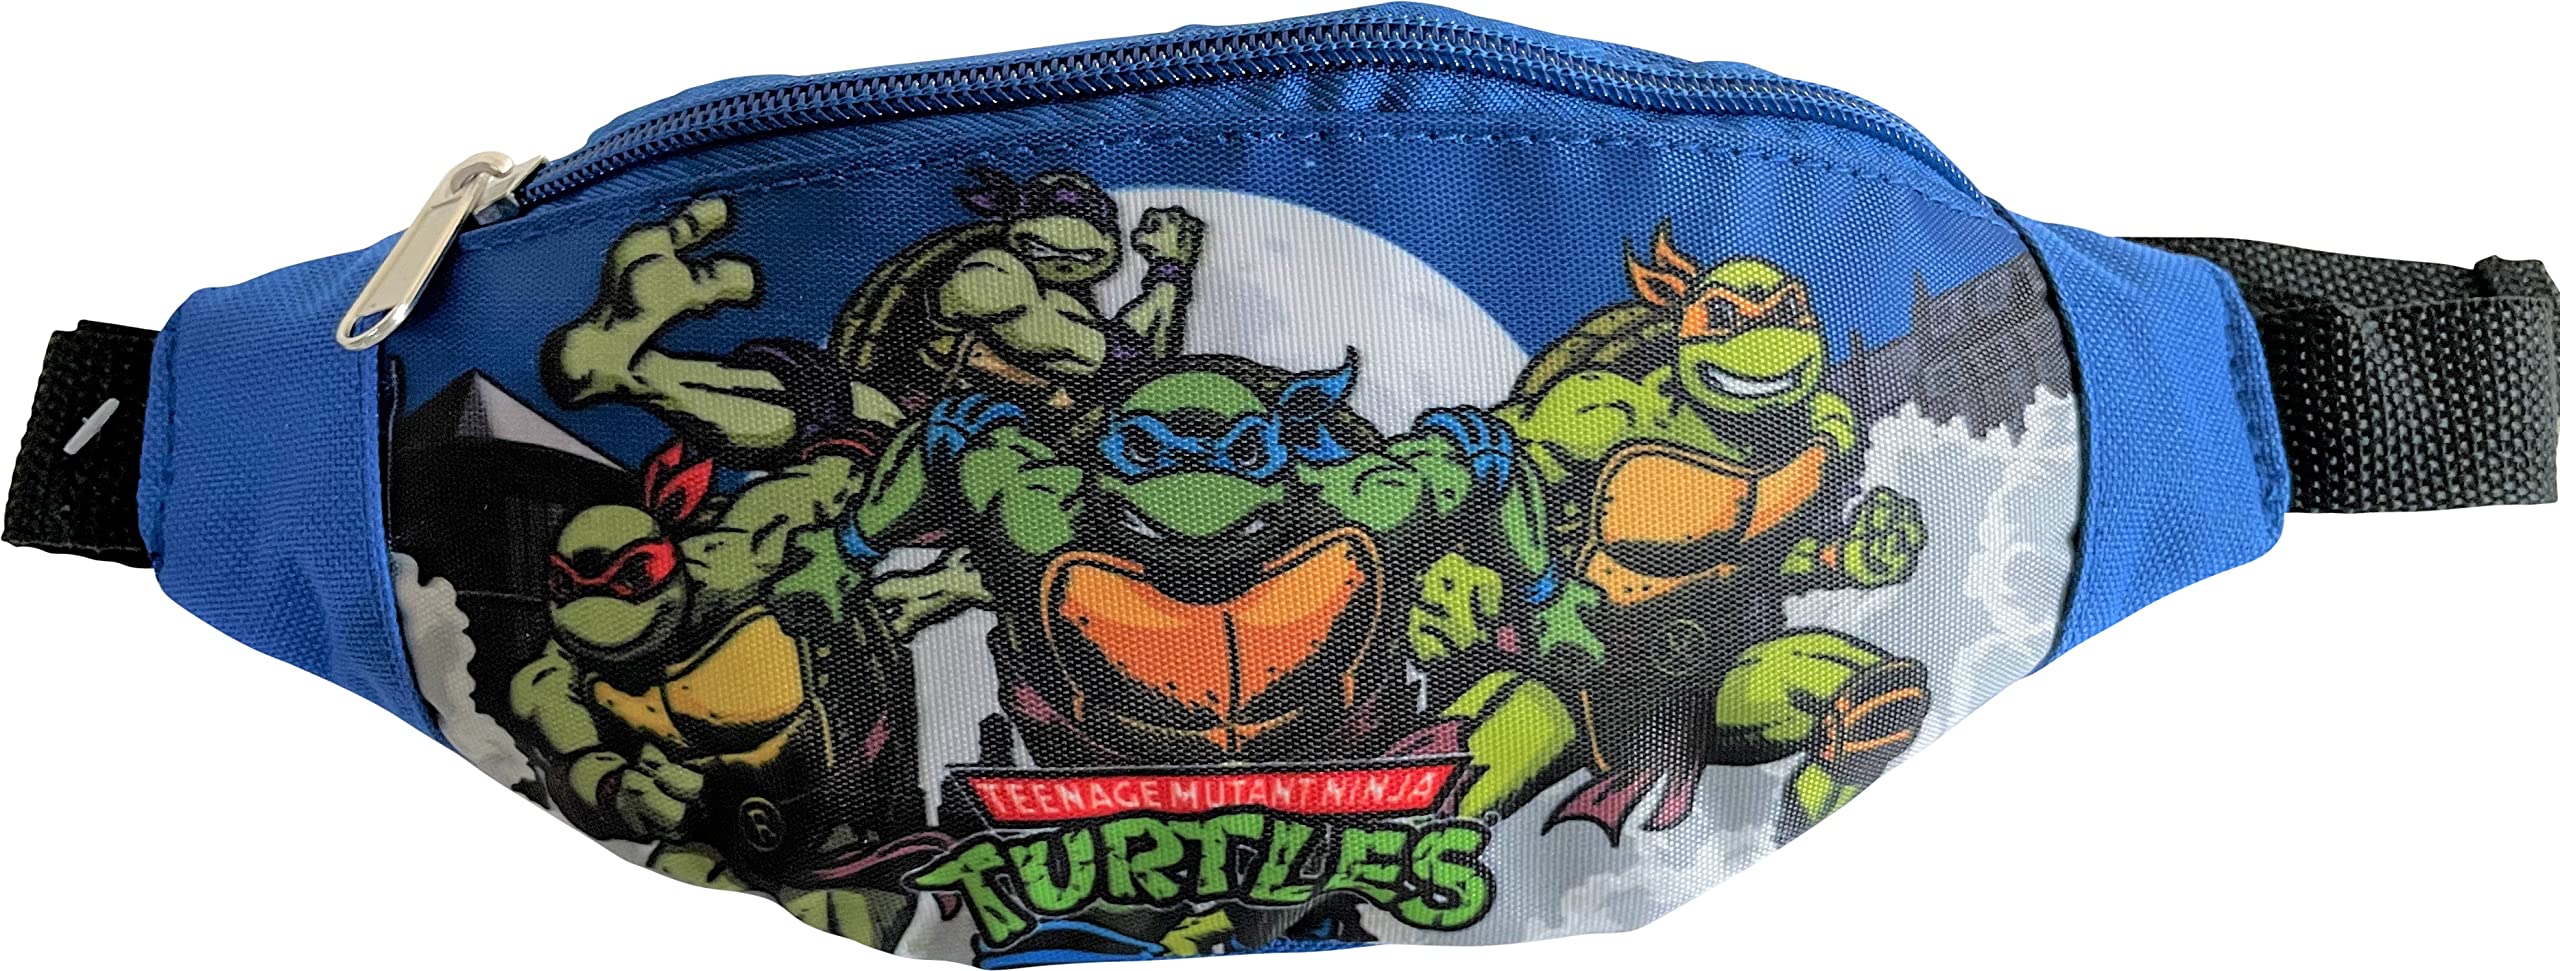 Teenage Mutant Ninja Turtles Little Boy Fanny Pack - Kids Phone Pouch Waist Bag